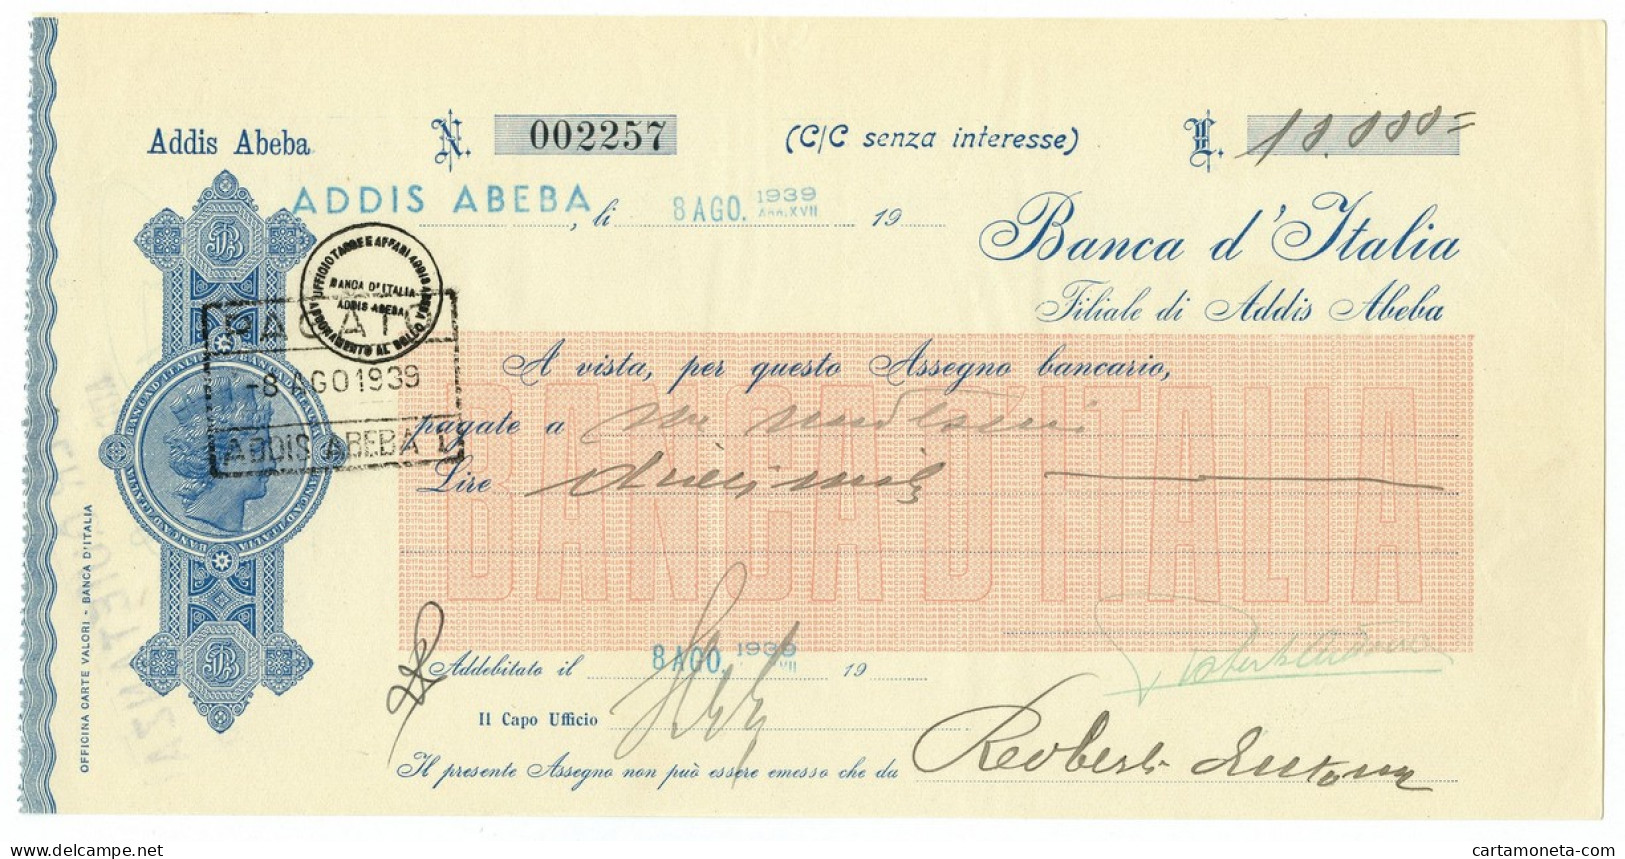 10000 LIRE ASSEGNO BANCA D'ITALIA FILALE ADDIS ABEBA MOD. ROSSO 08/08/1939 SUP - Africa Orientale Italiana